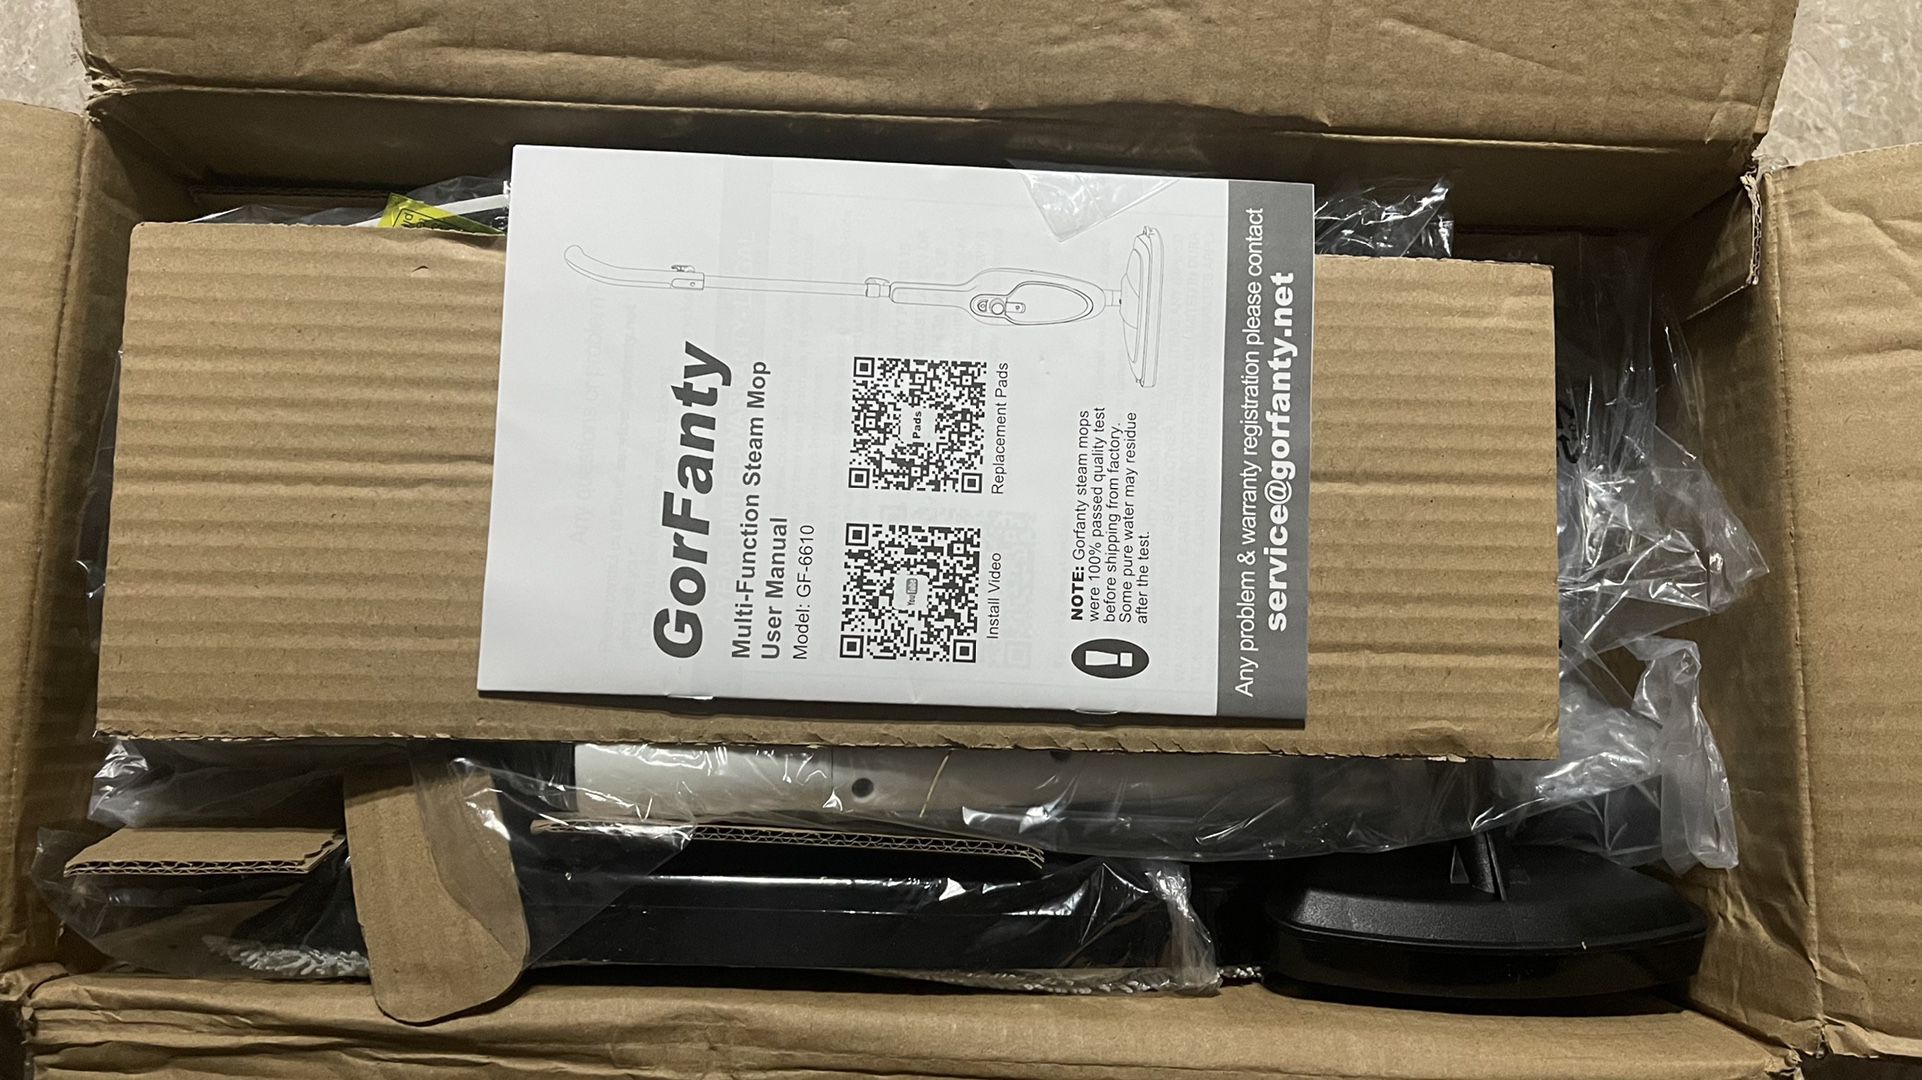 Gorfanty Steam Mop 10-in-1 MultiPurpose Handheld Steam Cleaner Detachable Floor Steamer for...